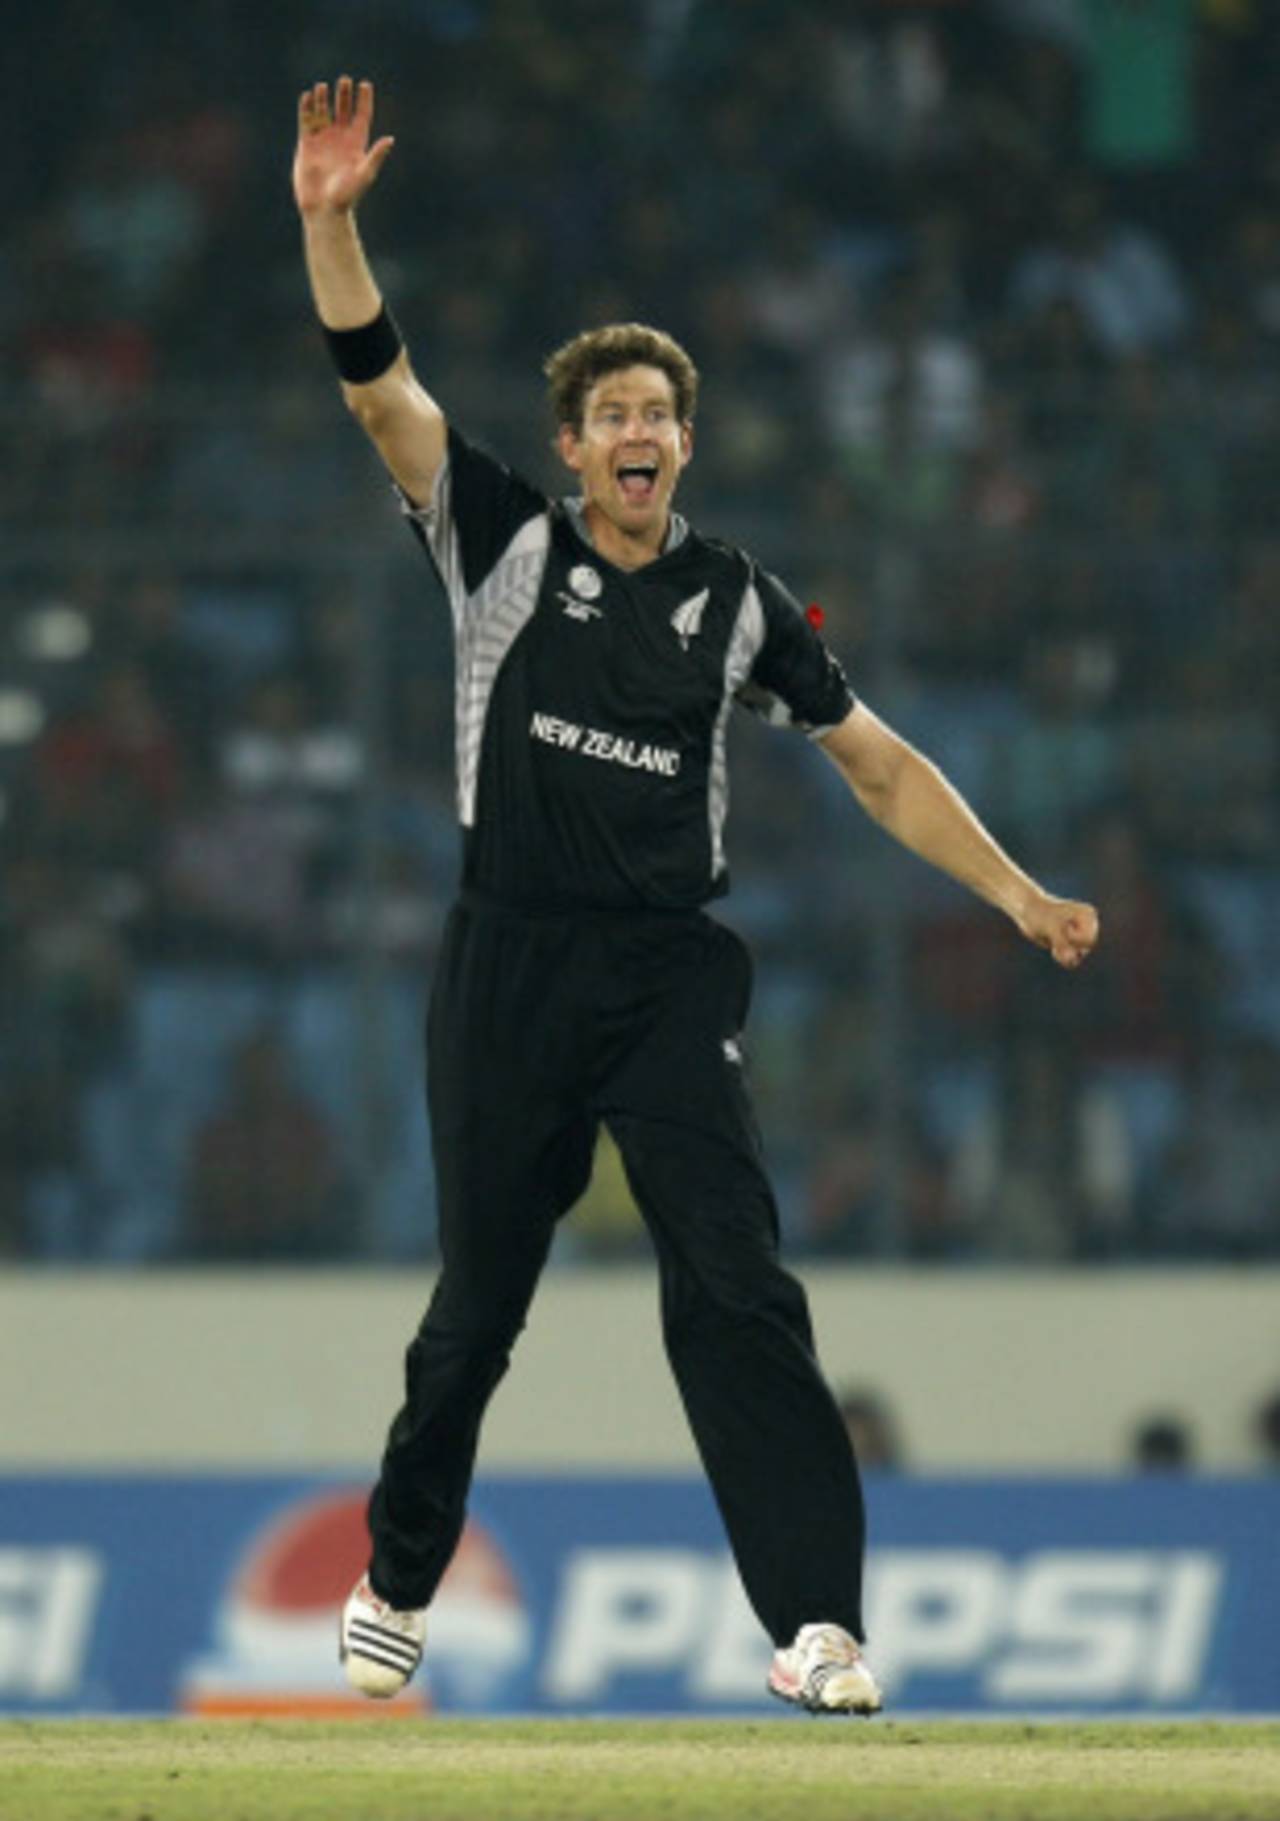 Jacob Oram took four wickets in the World Cup quarter-final against South Africa&nbsp;&nbsp;&bull;&nbsp;&nbsp;Associated Press